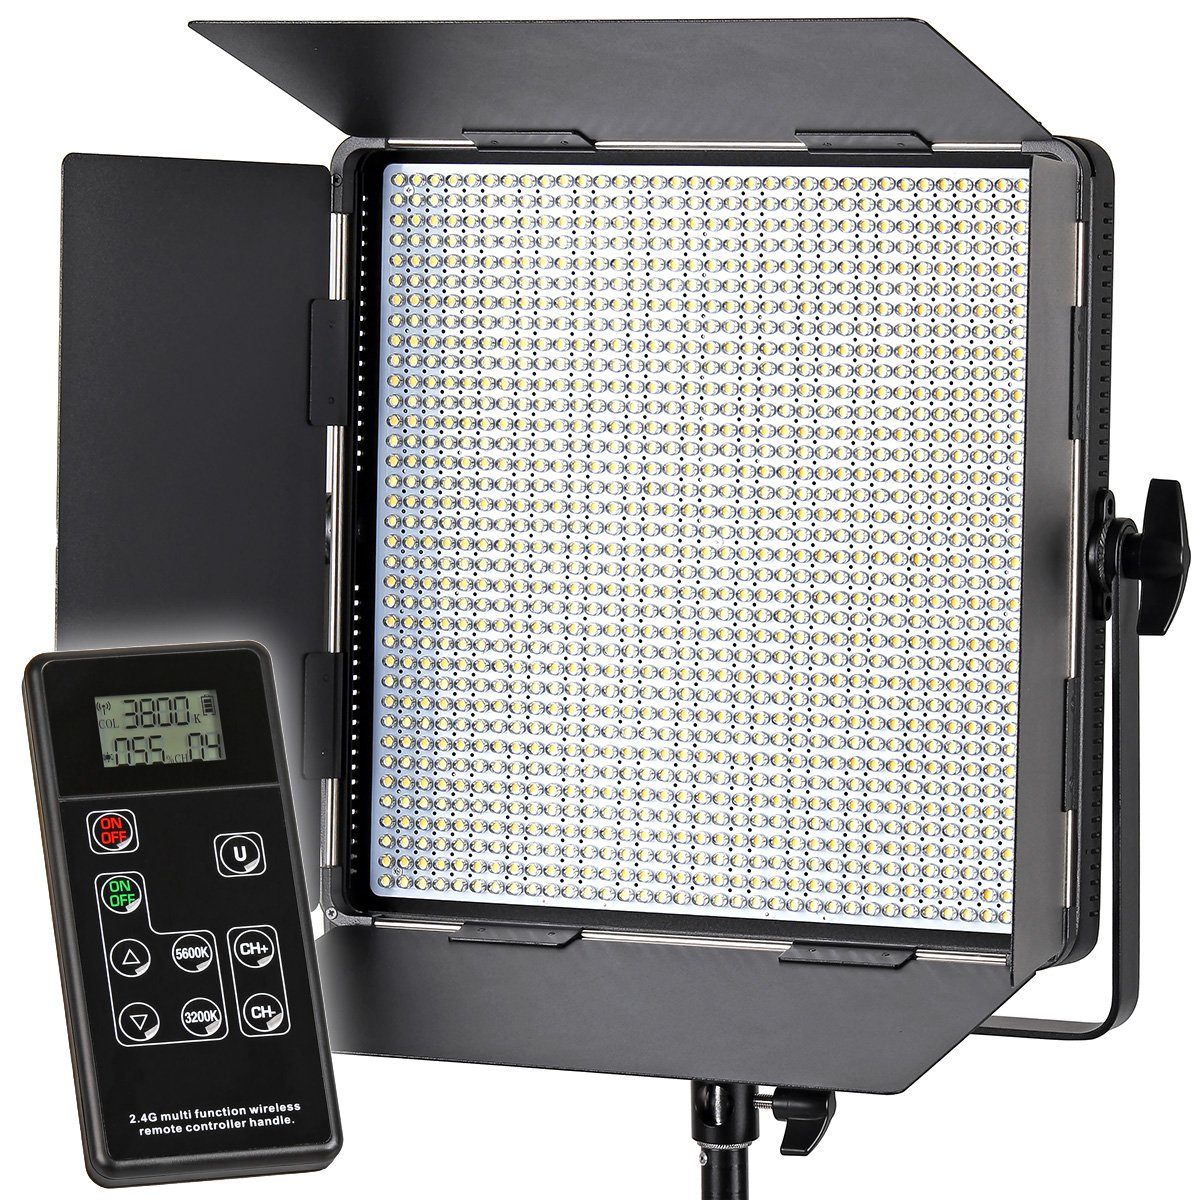 LEDs LED kompatibel Profi-Videoleuchte ayex 1296 inkl. Bilderleuchte Funk-Fernbedienung DMX